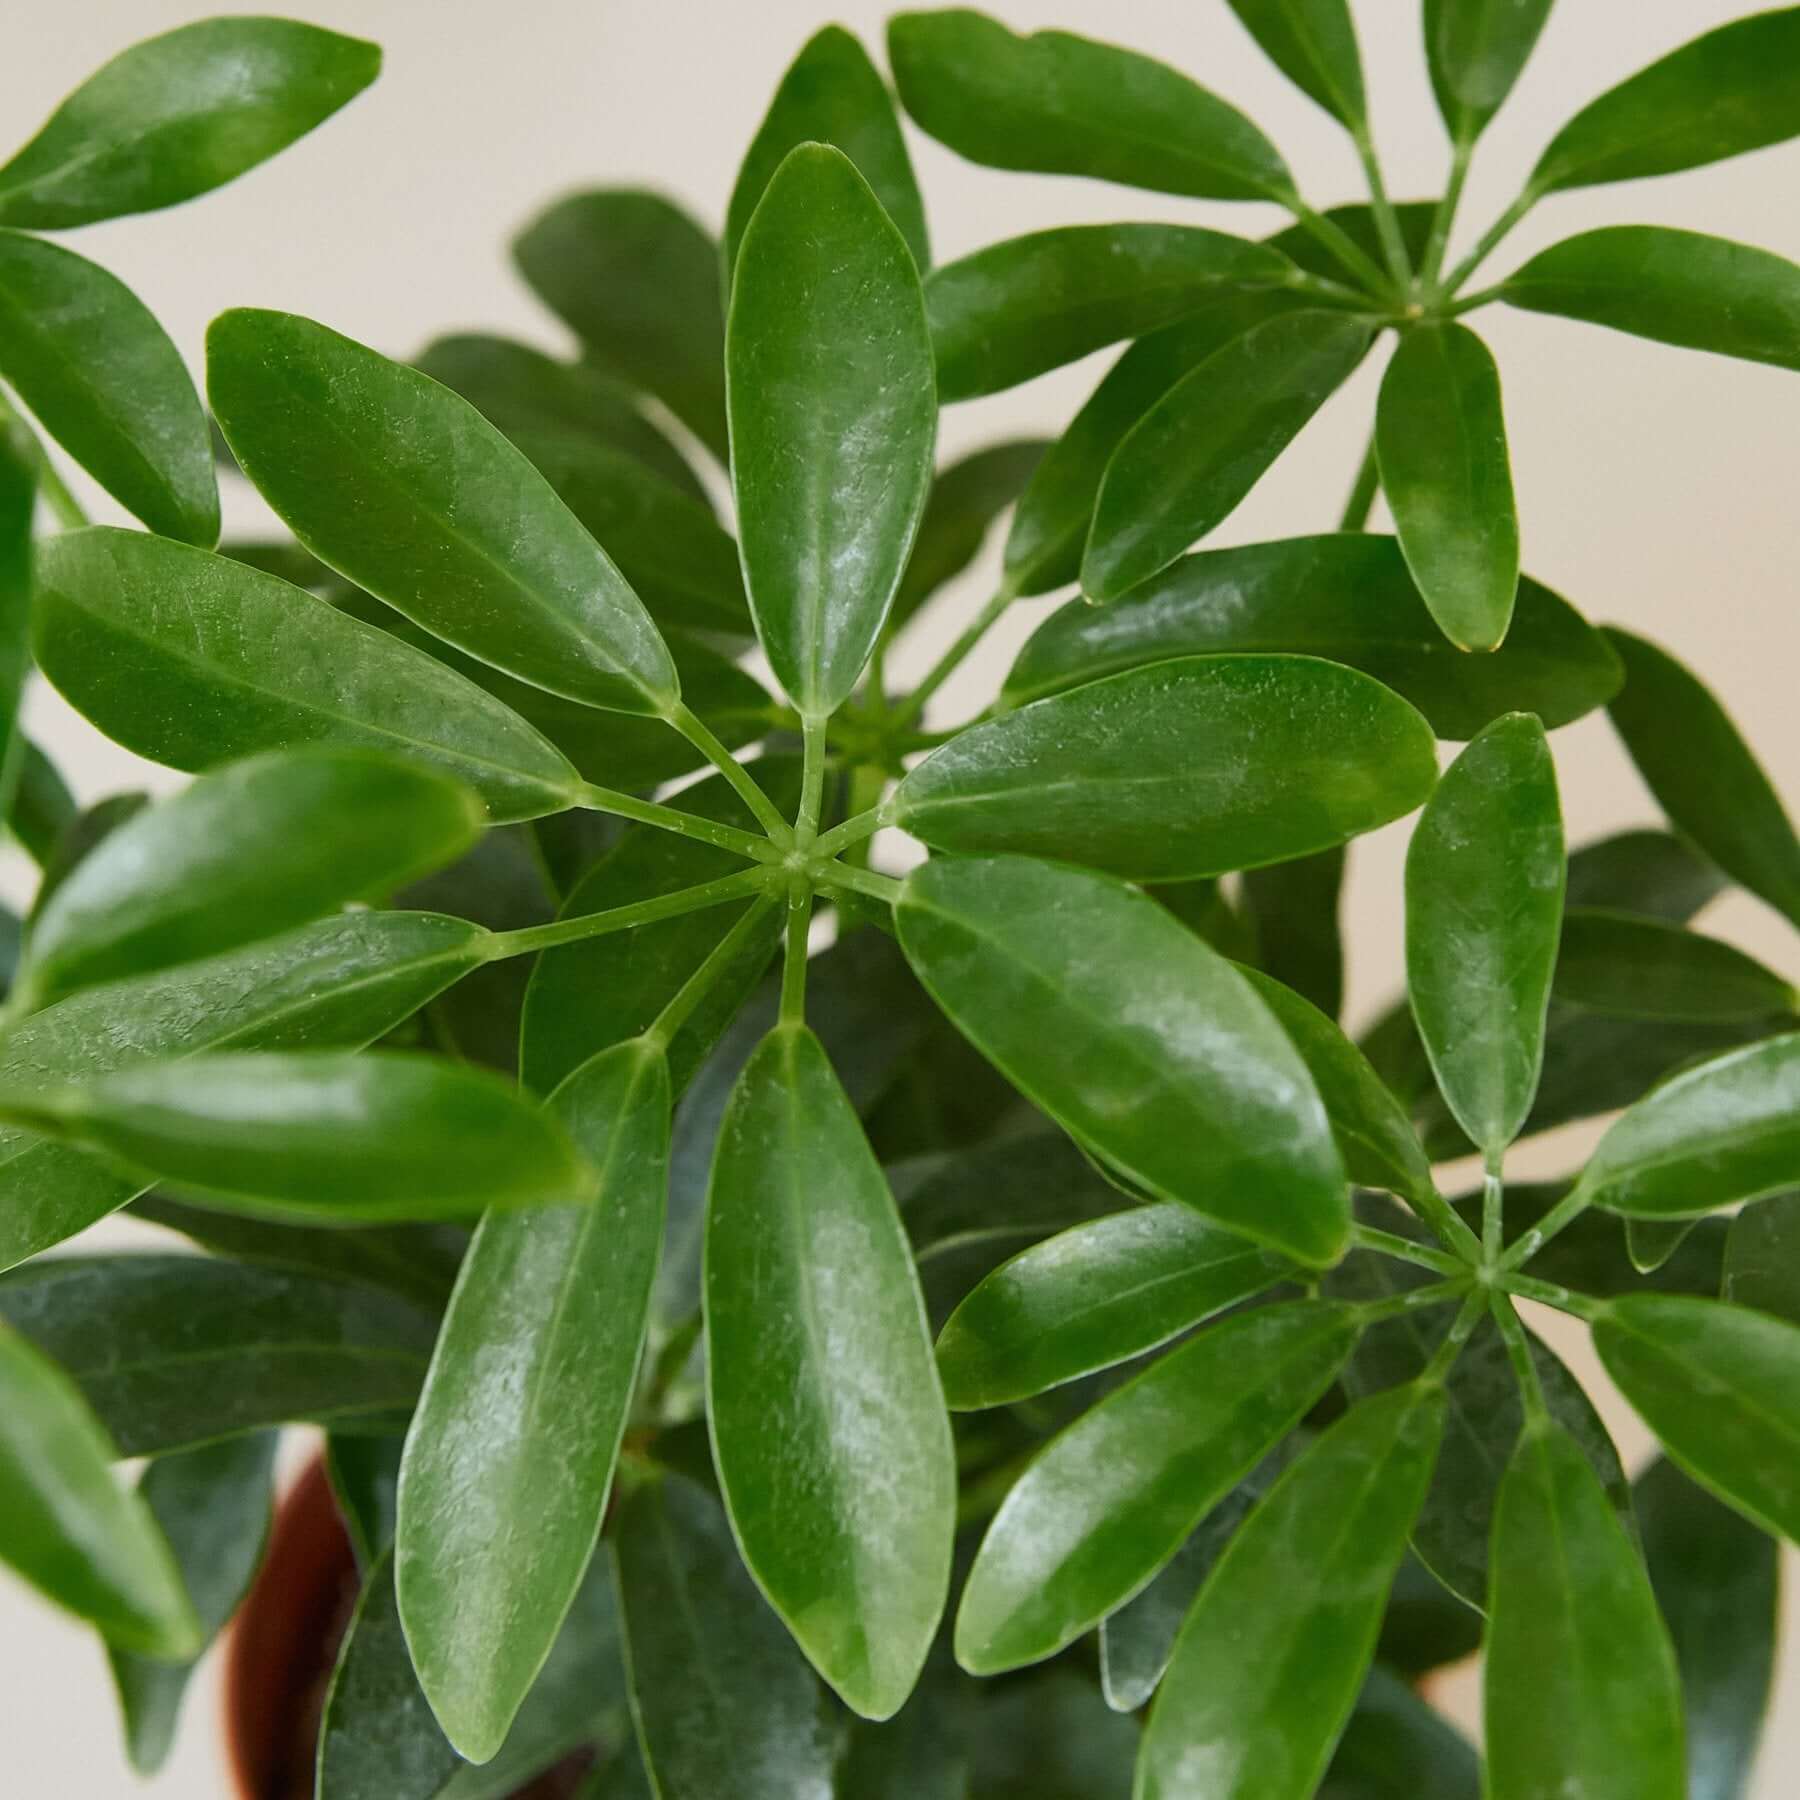 Schefflera Arboricola - Umbrella Plant | Modern house plants that clean the air